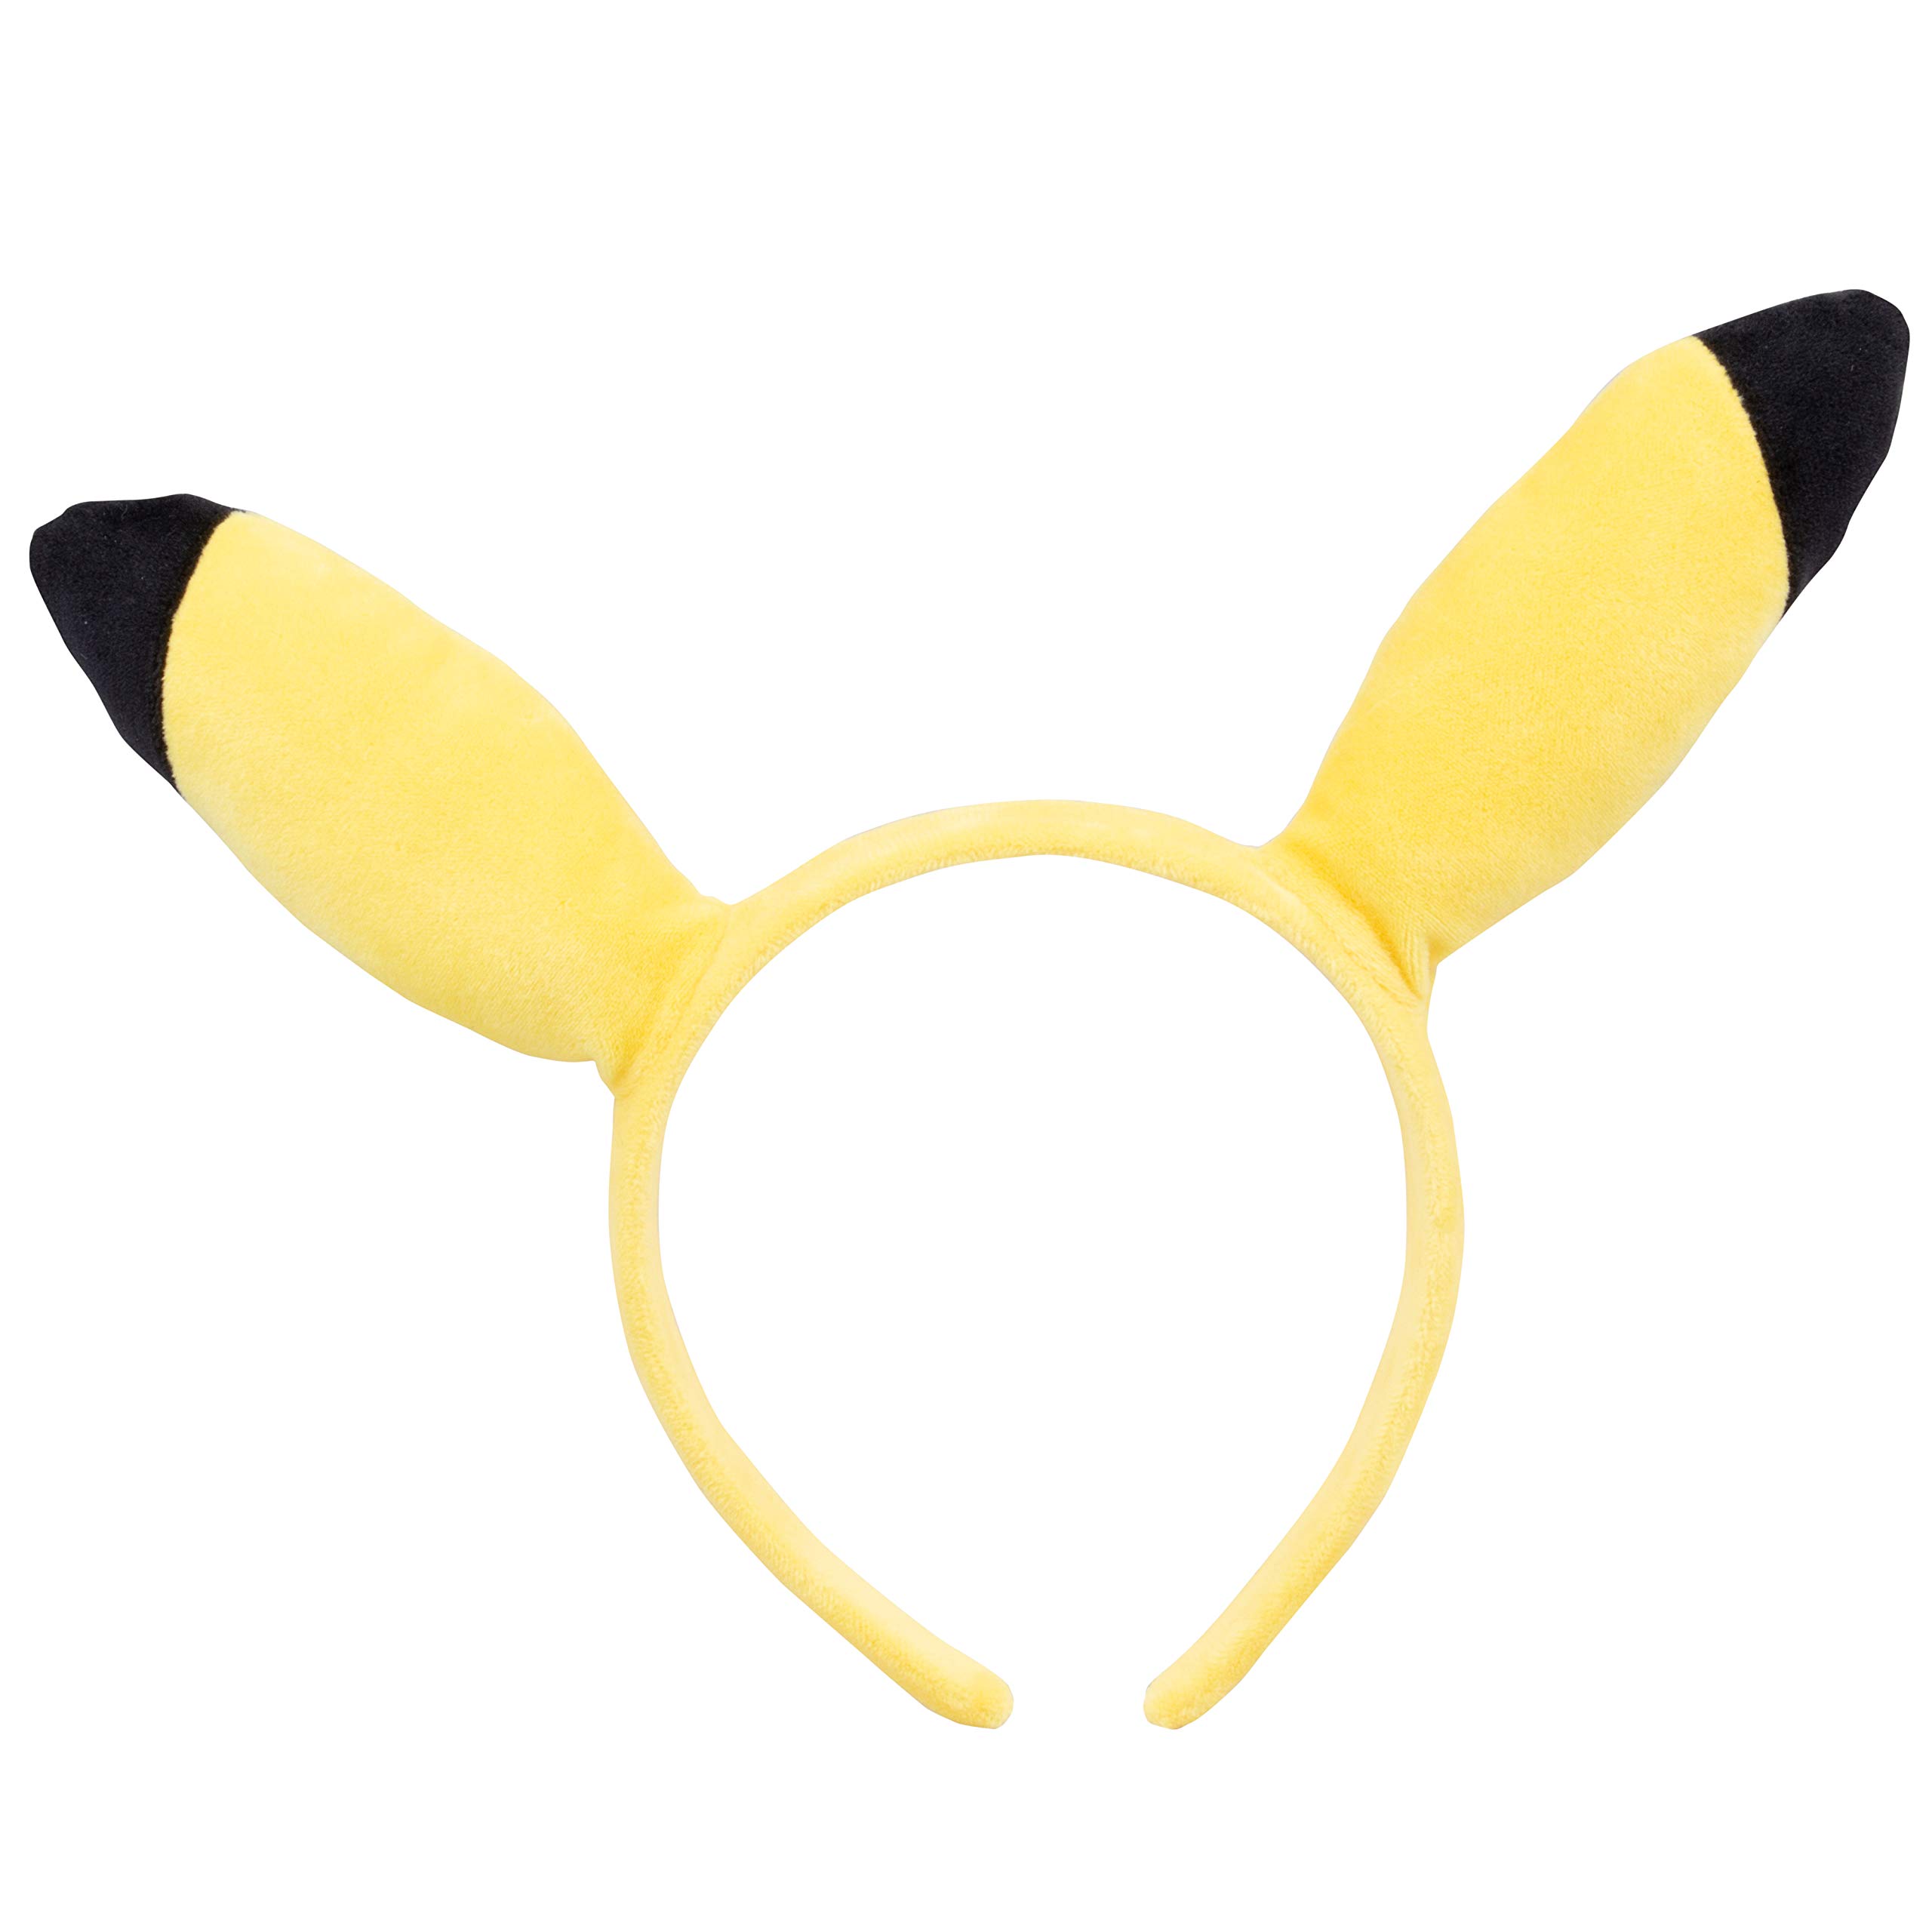 Pokémon Pikachu Plush Headband - Pikachu Ears for Halloween, Accessory, Dress Up, Pretend & More - One Size Fits All